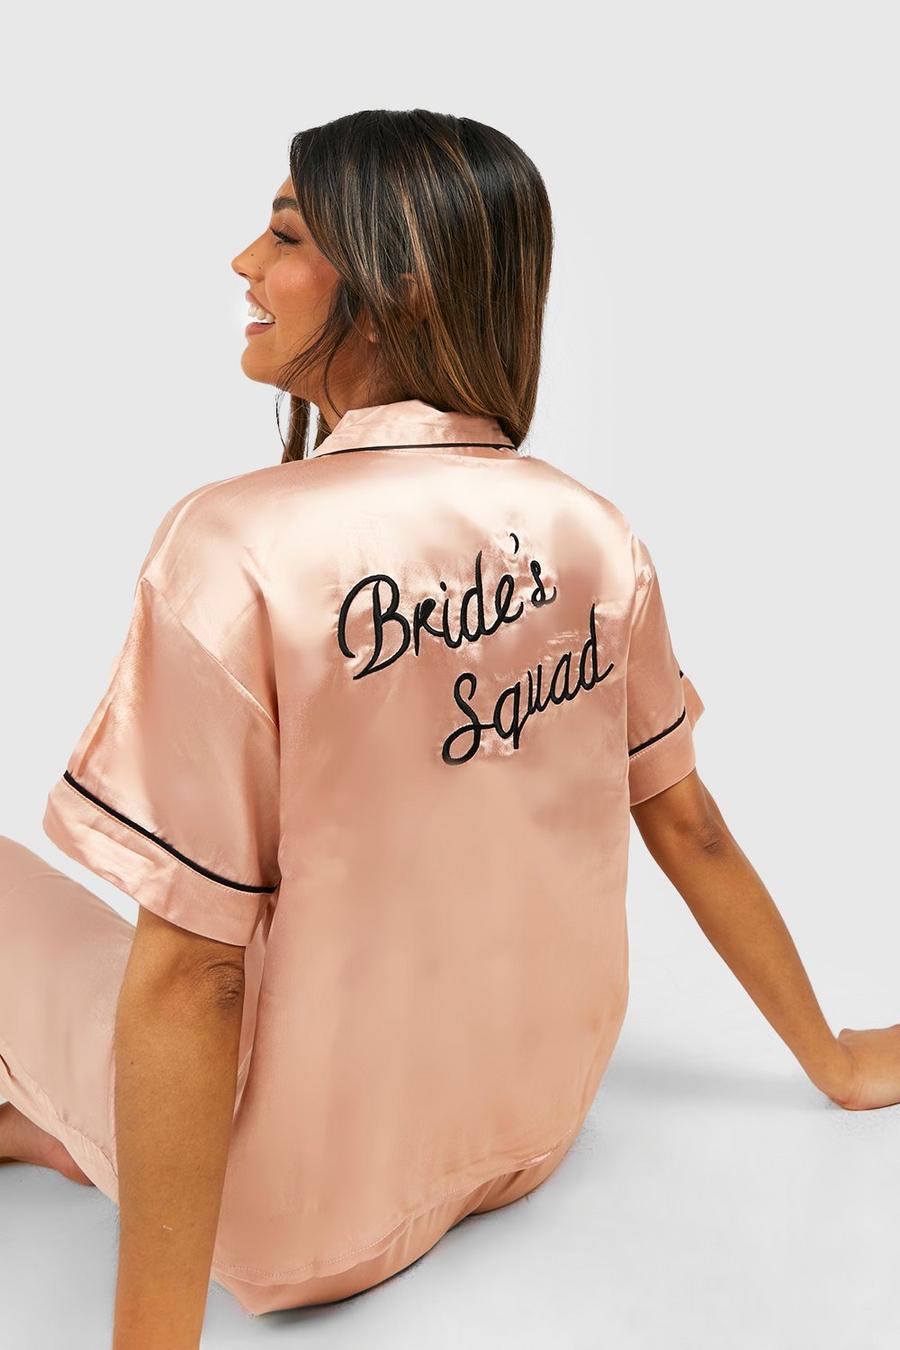 Set pigiama rosa dorato con ricami Bride Squad, Oro rosa metálicos